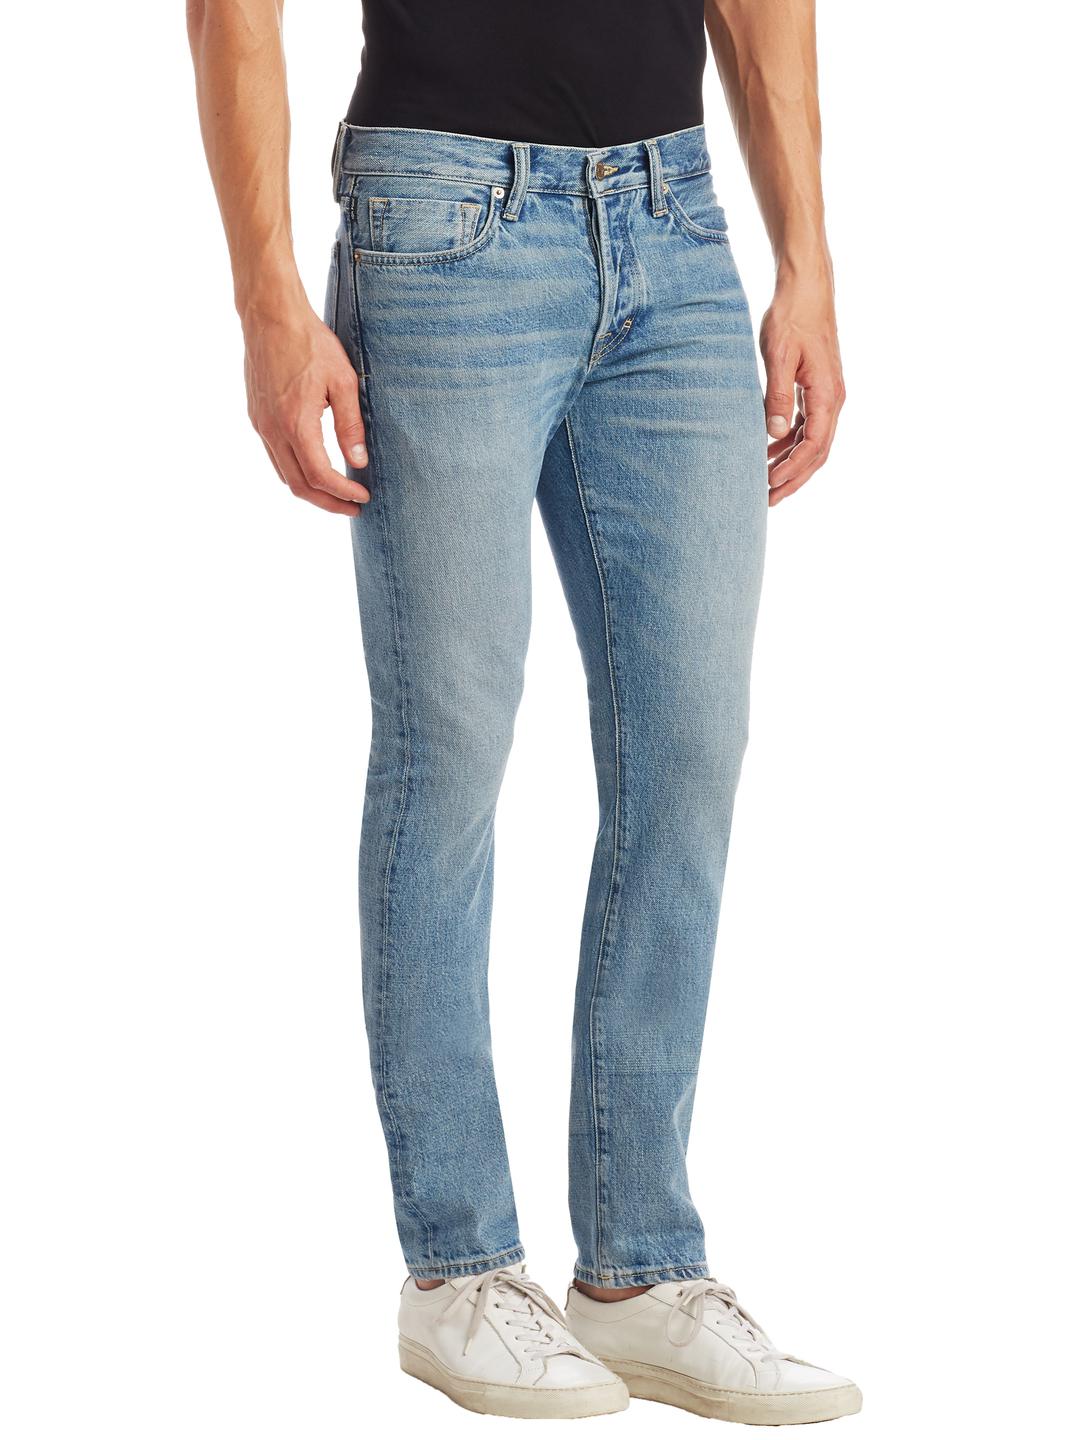 Tom Ford Cotton Slim Fit Jeans in Light Blue (Blue) for Men - Lyst